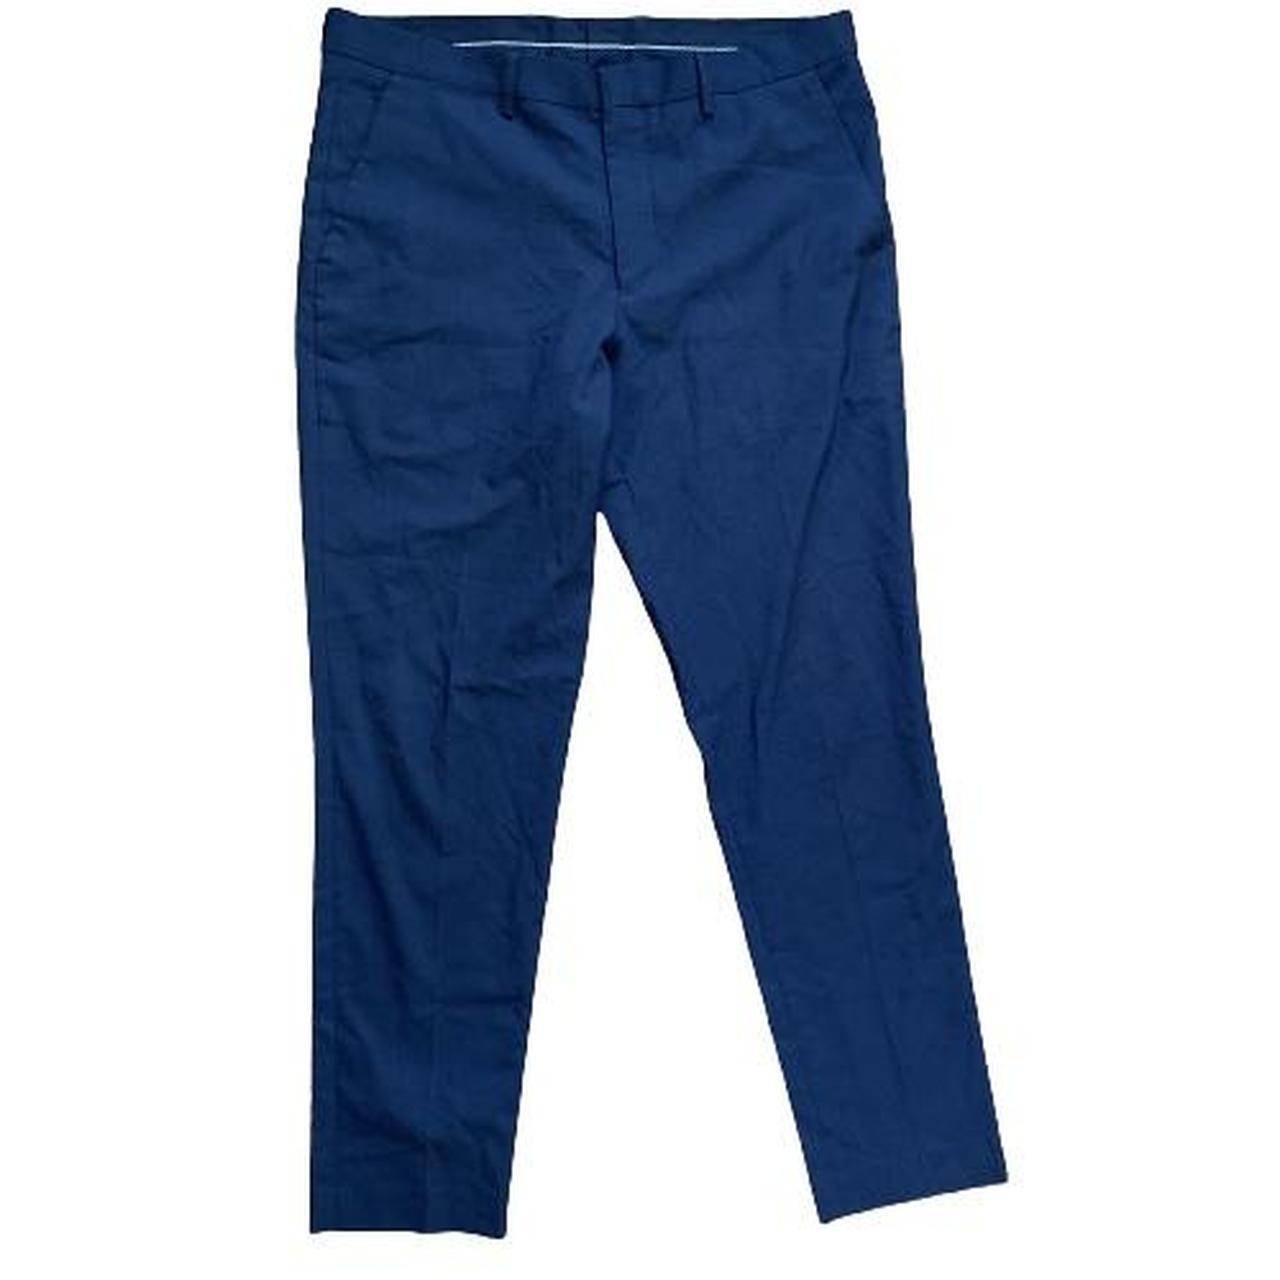 Navy Blue Dress Pants Good Condition Size... - Depop